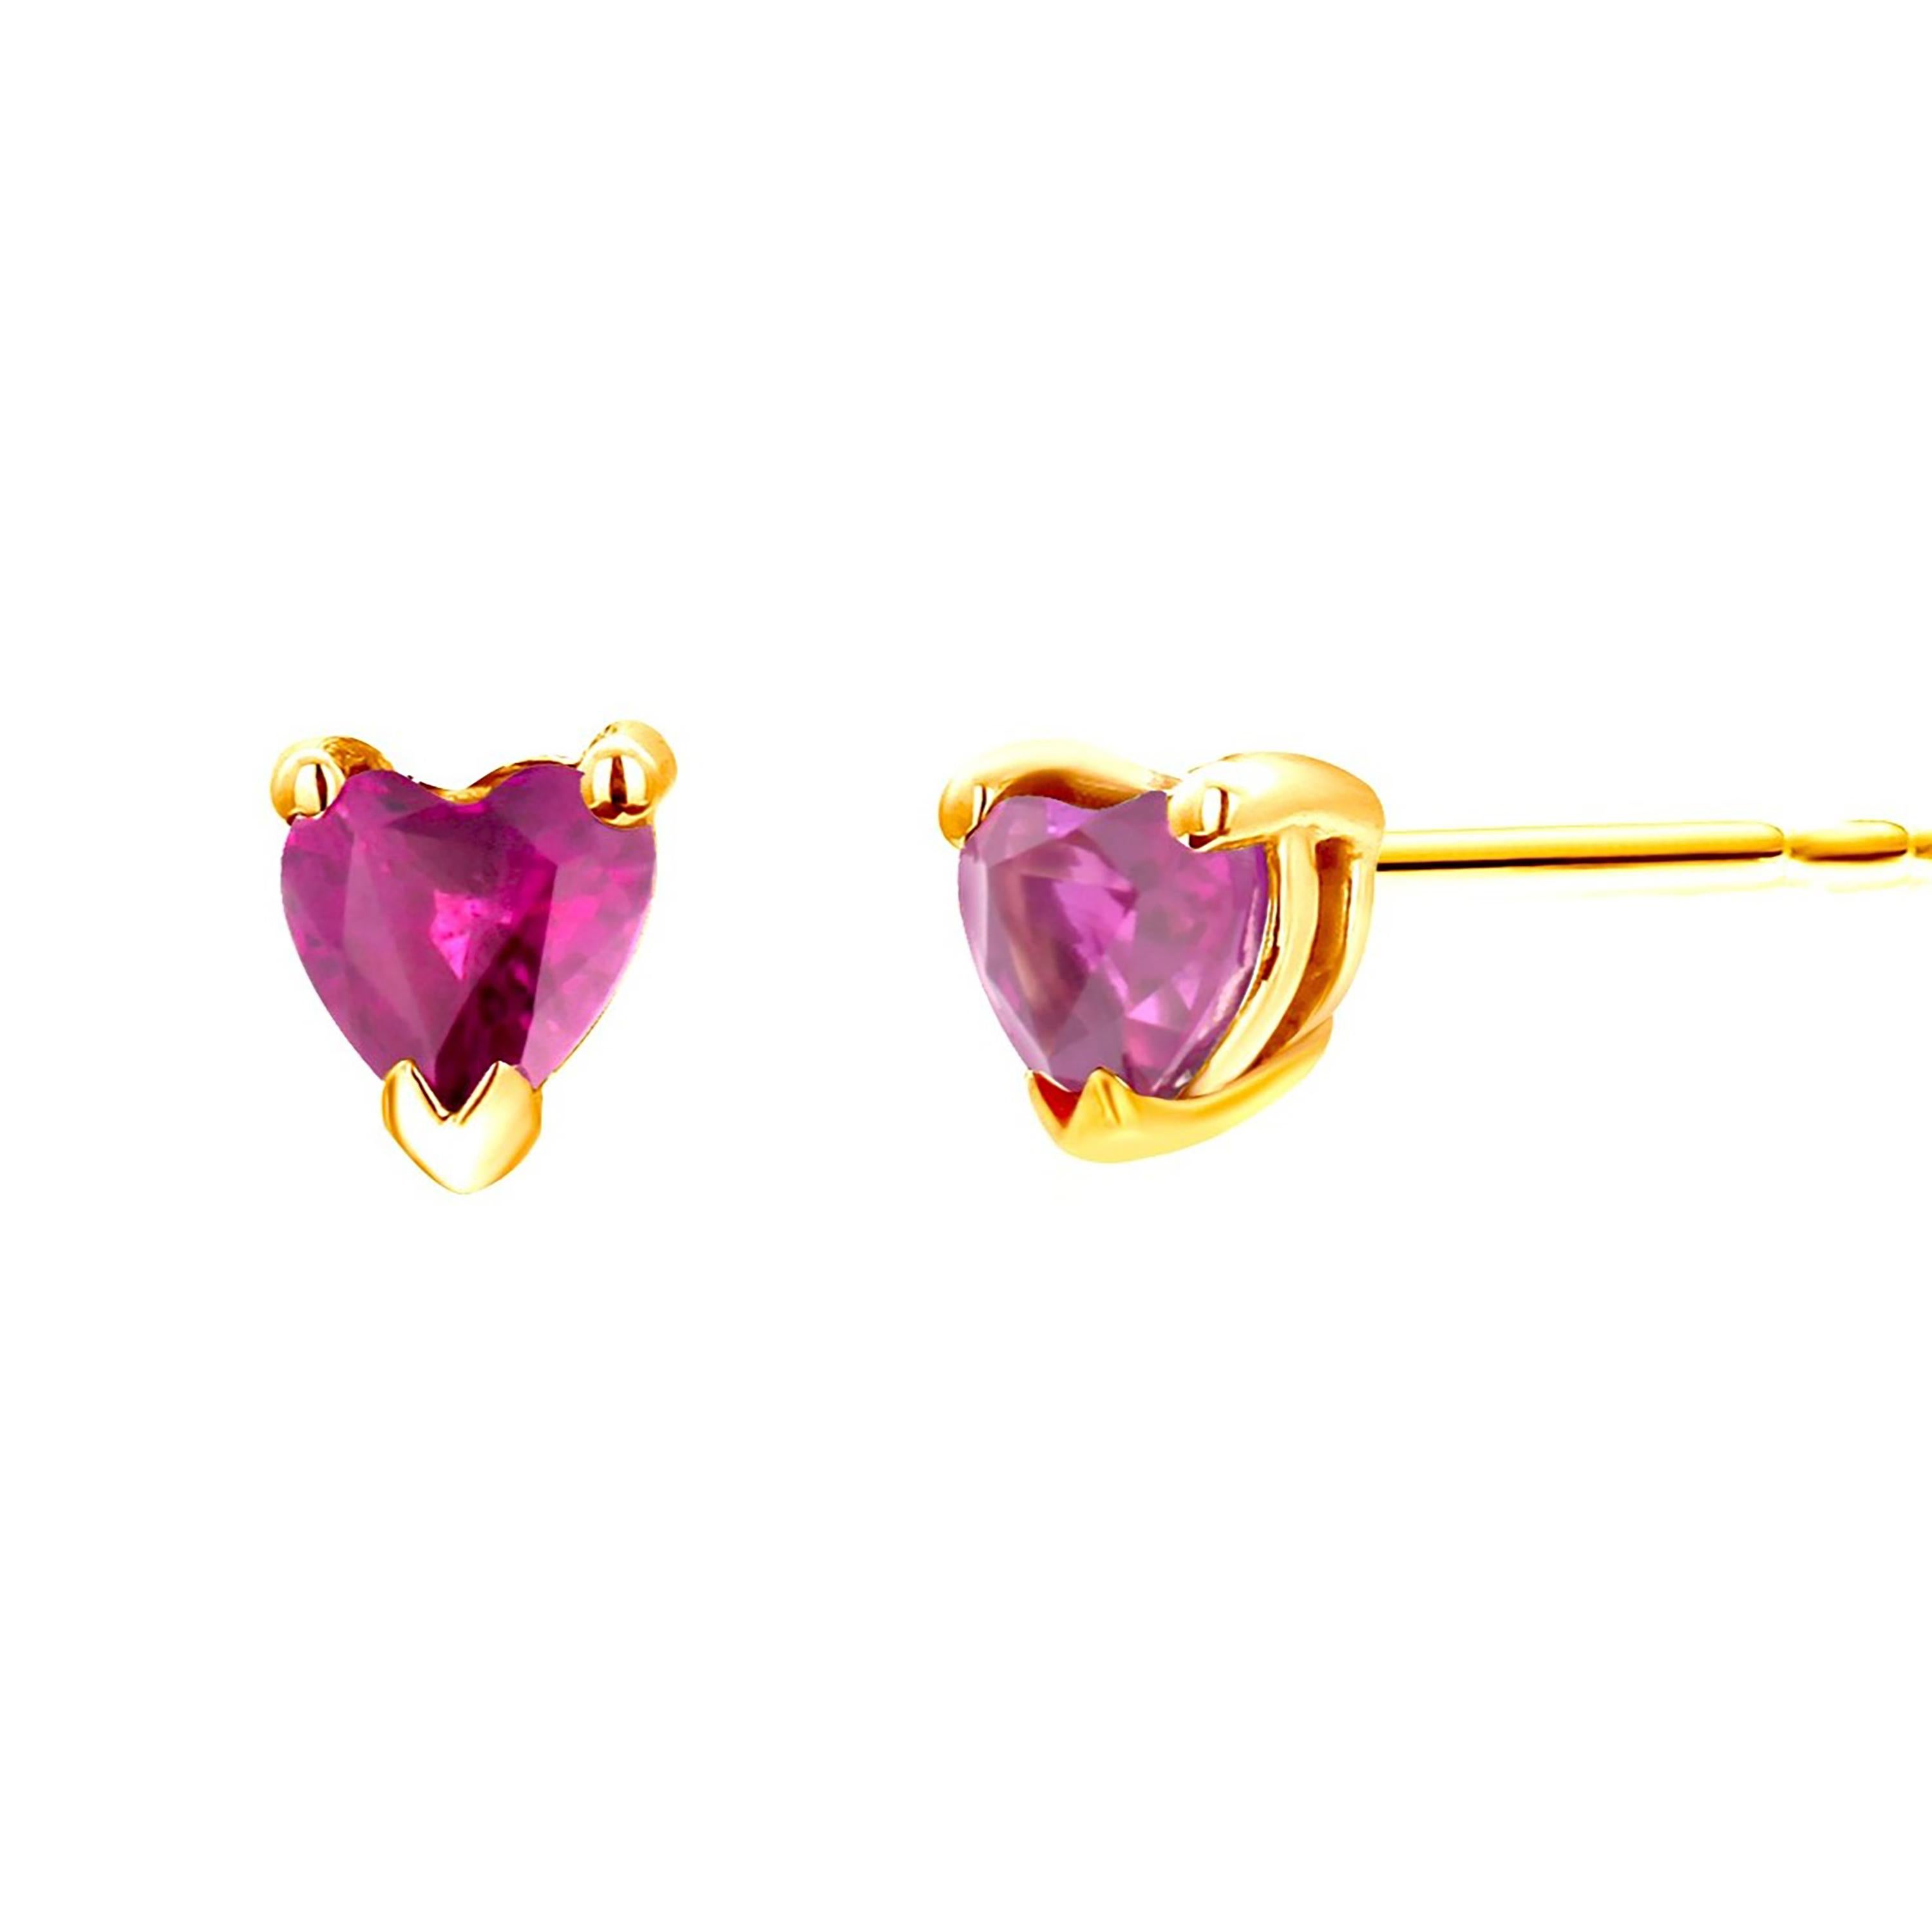 Heart Shaped Rubies Set in Yellow Gold Stud Earrings 1